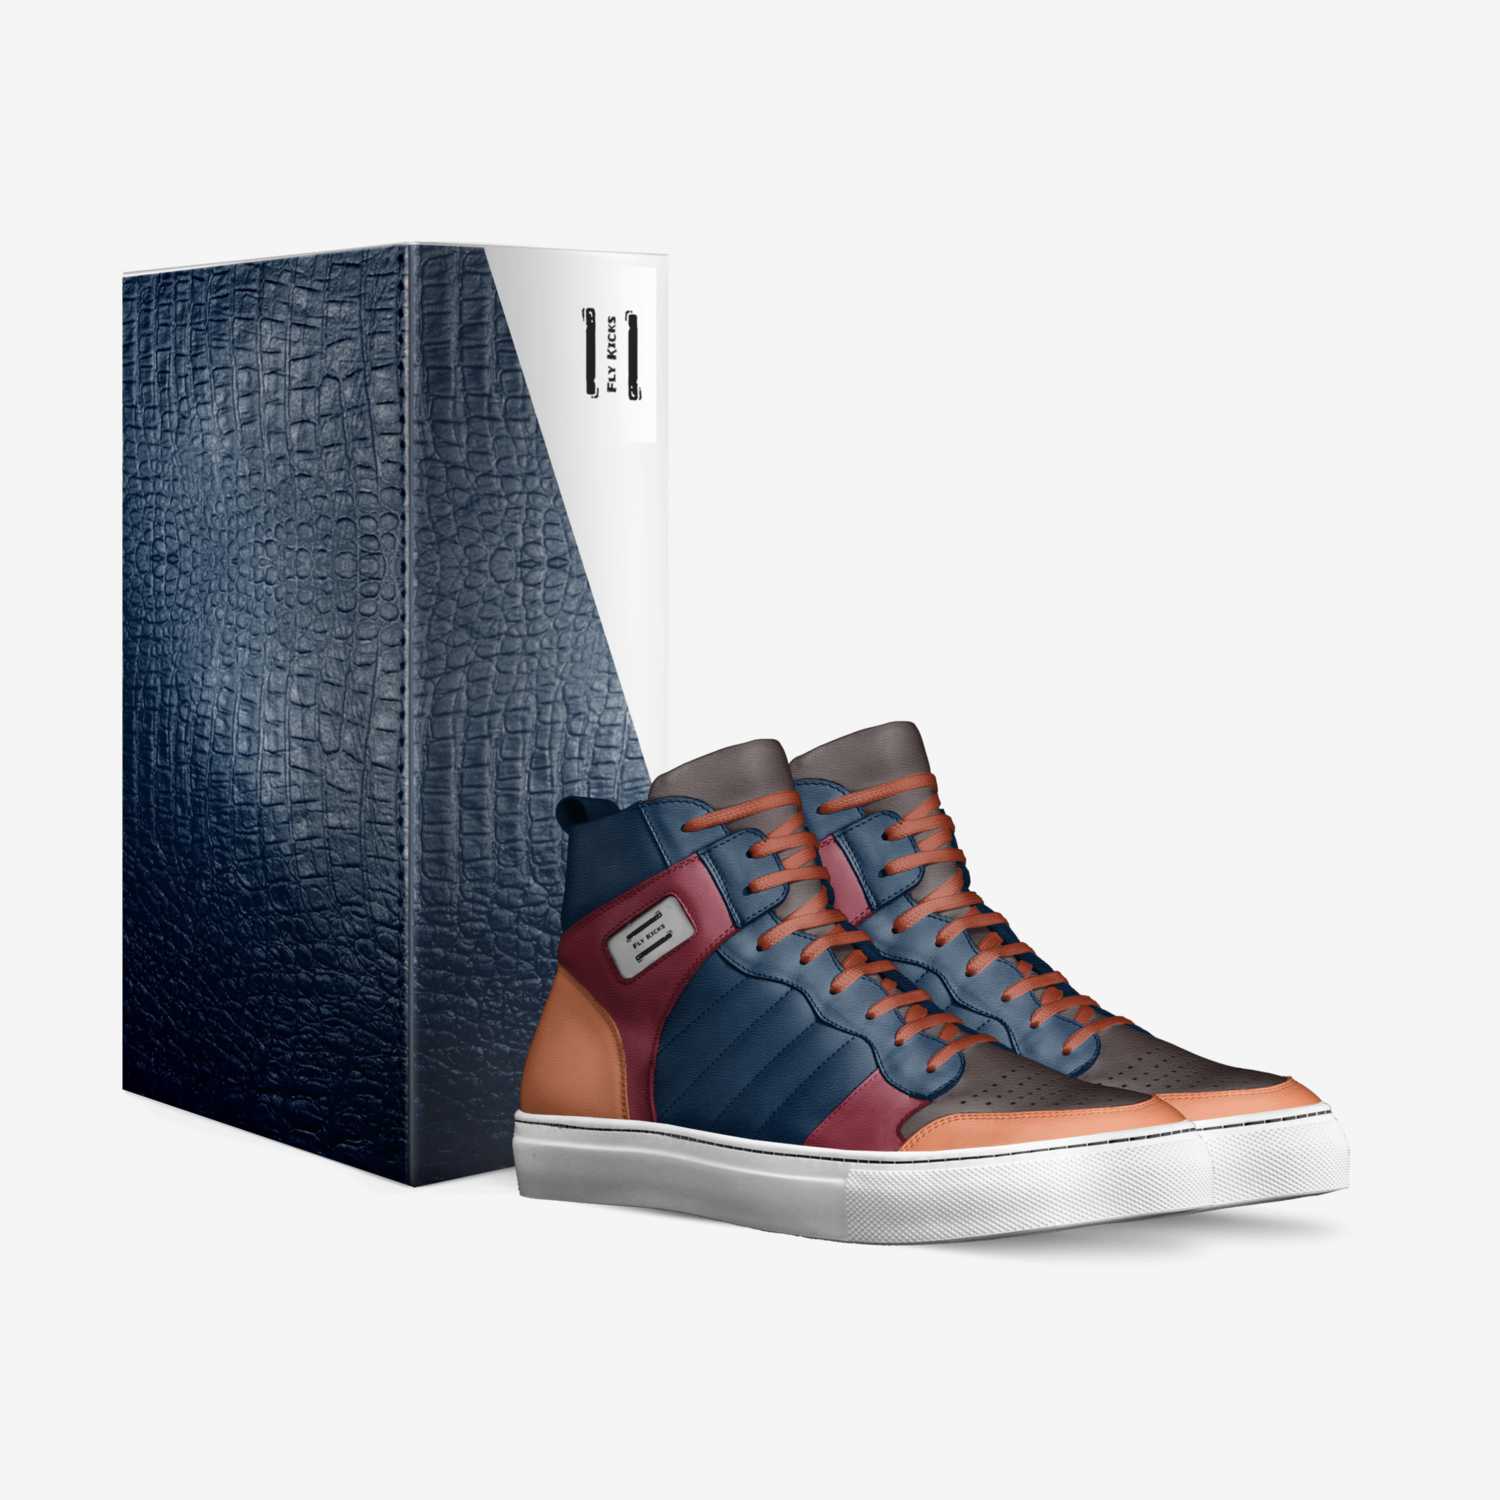 Fly Kicks custom made in Italy shoes by Holden John Michael Seton | Box view